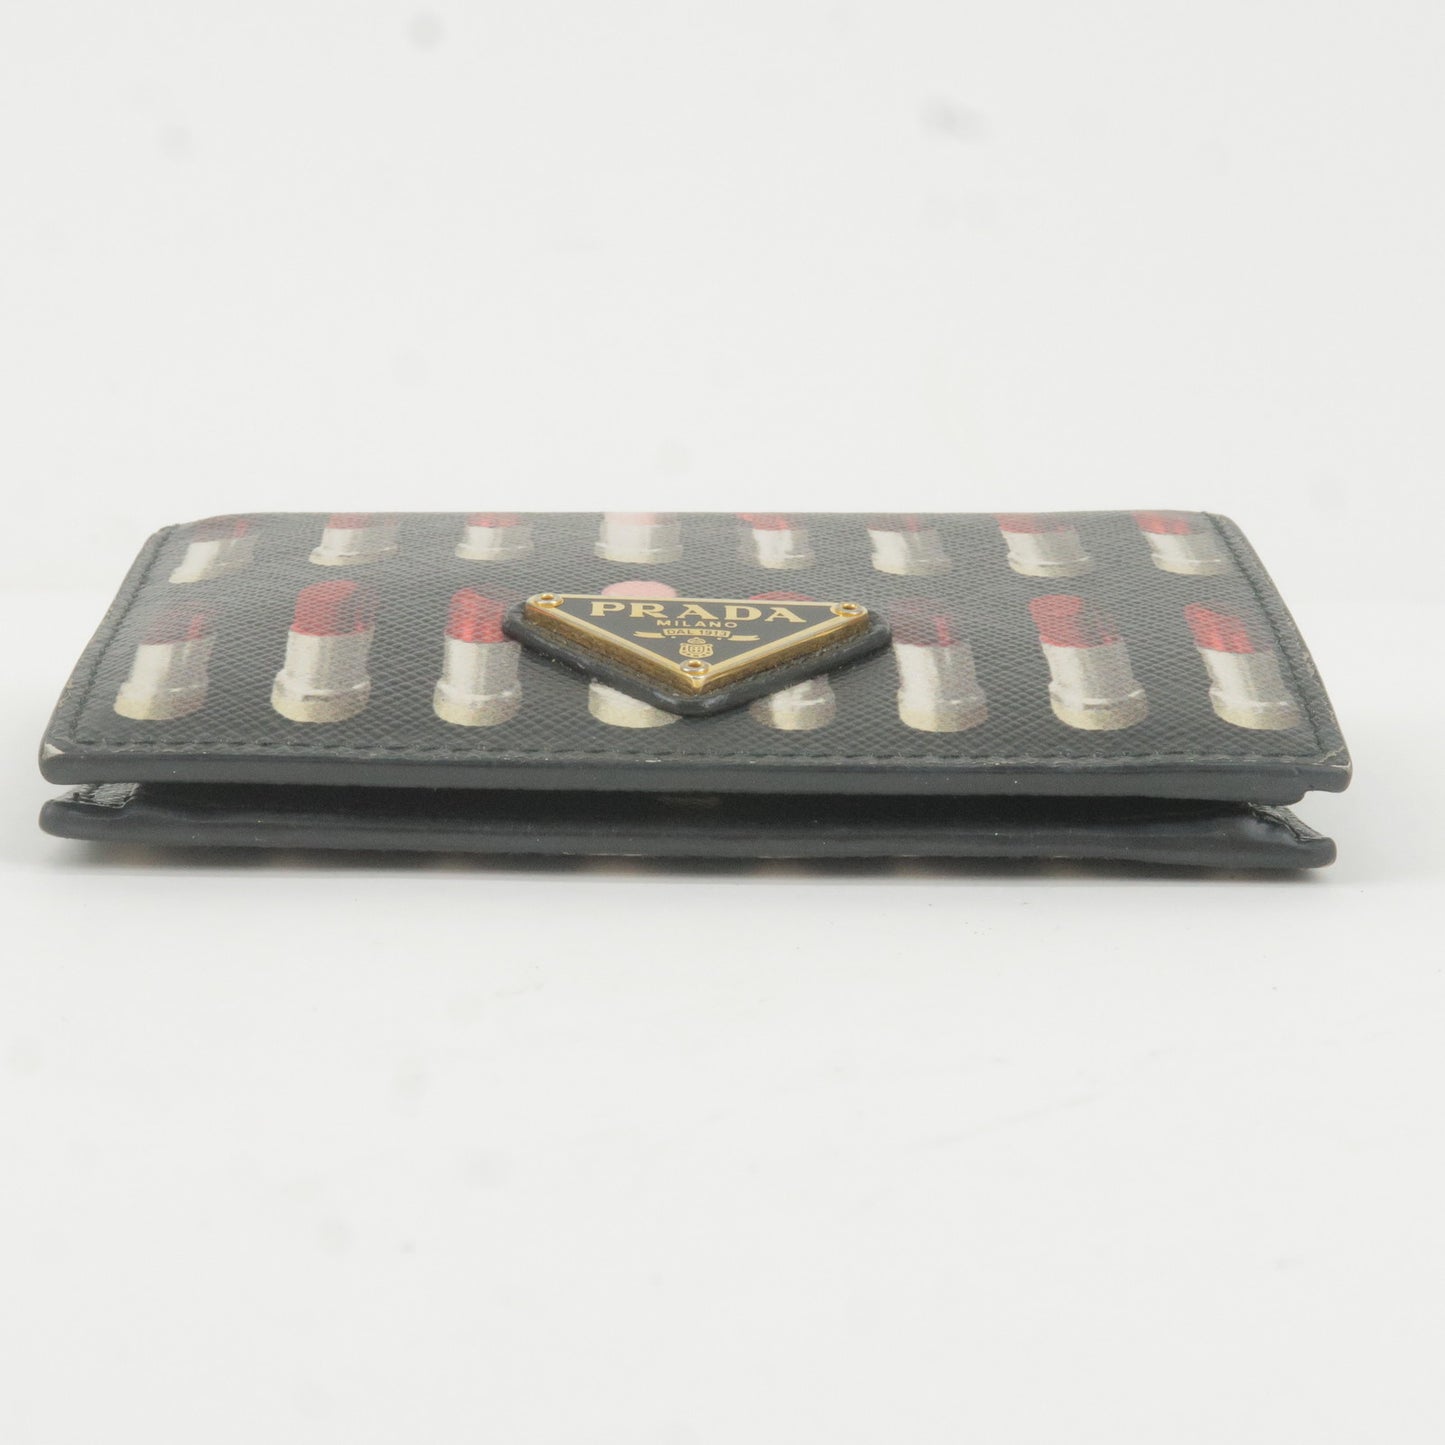 PRADA Logo Leather Lipsticks Bi-Fold Small Wallet NERO Black